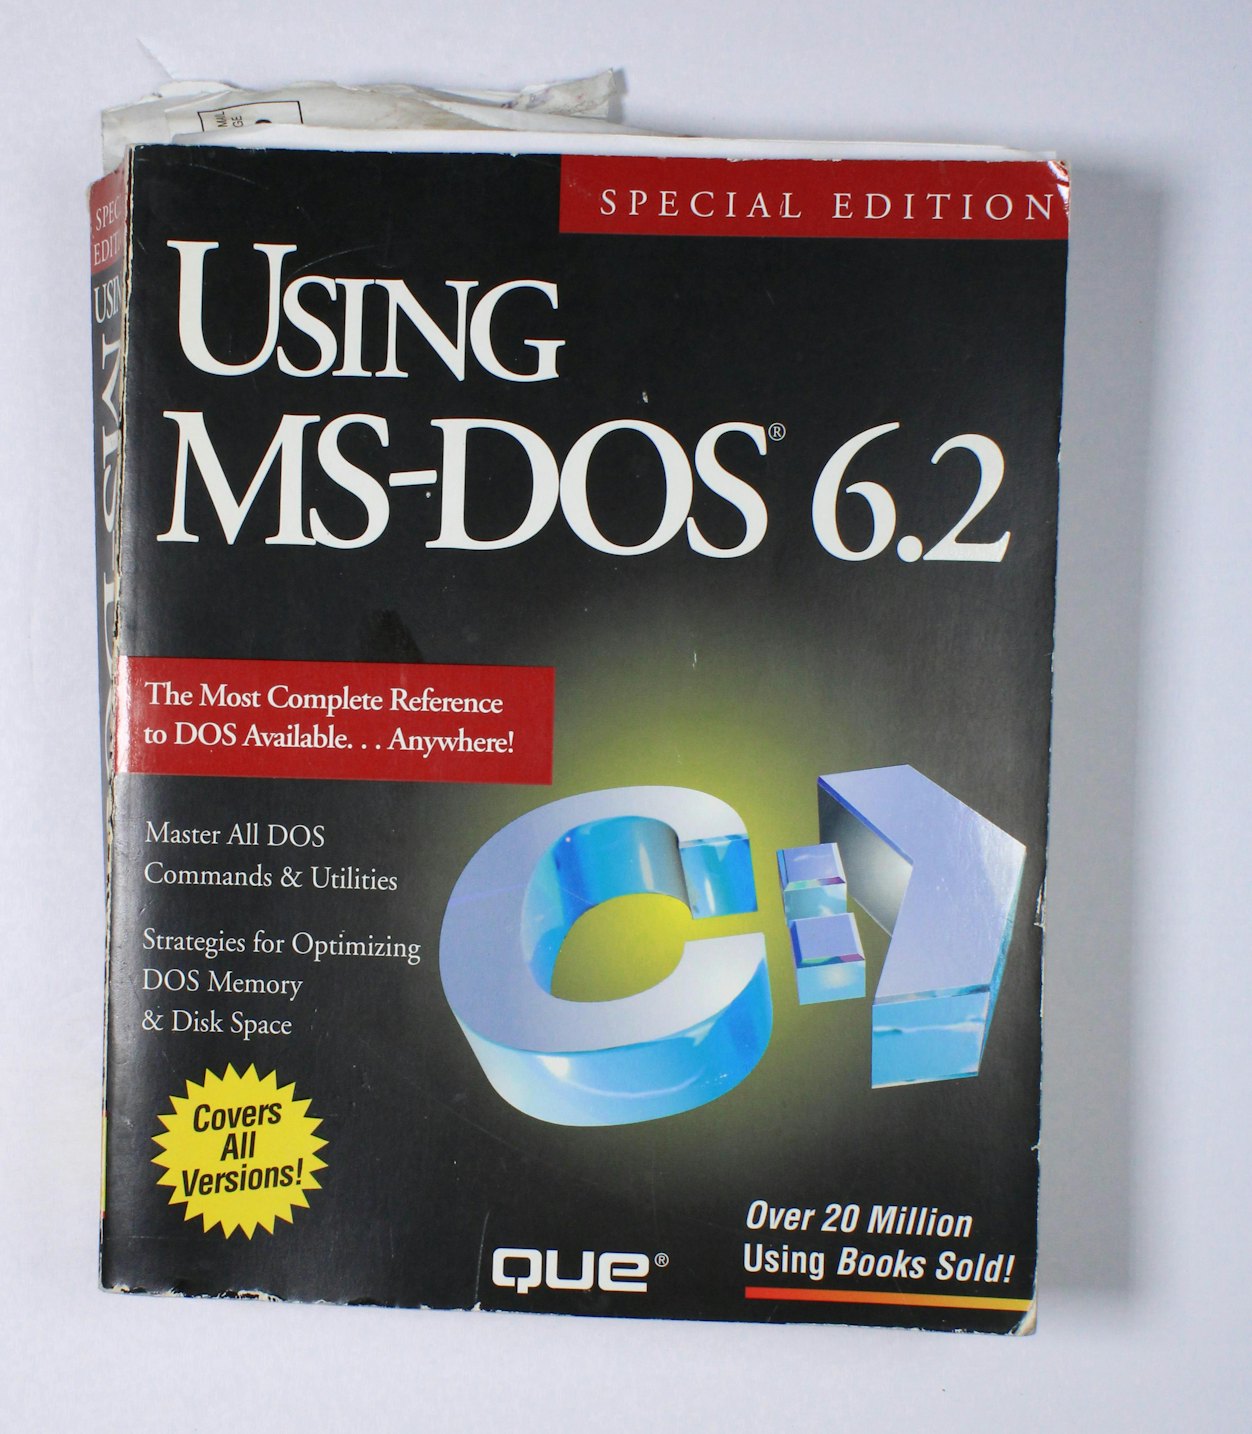 Using MS-DOC 6.2